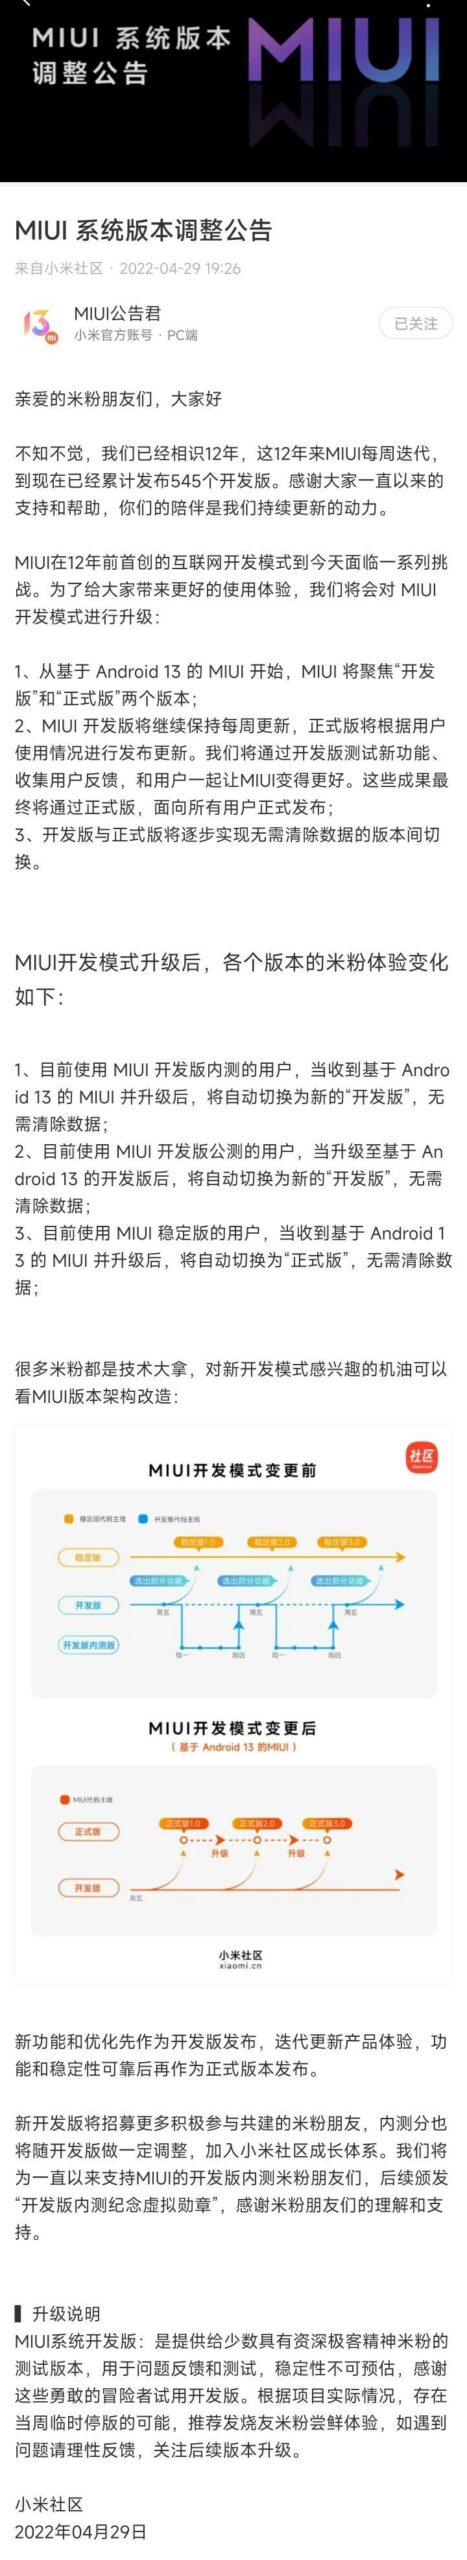 MIUI SYSTEM Version Adjustment Announcement